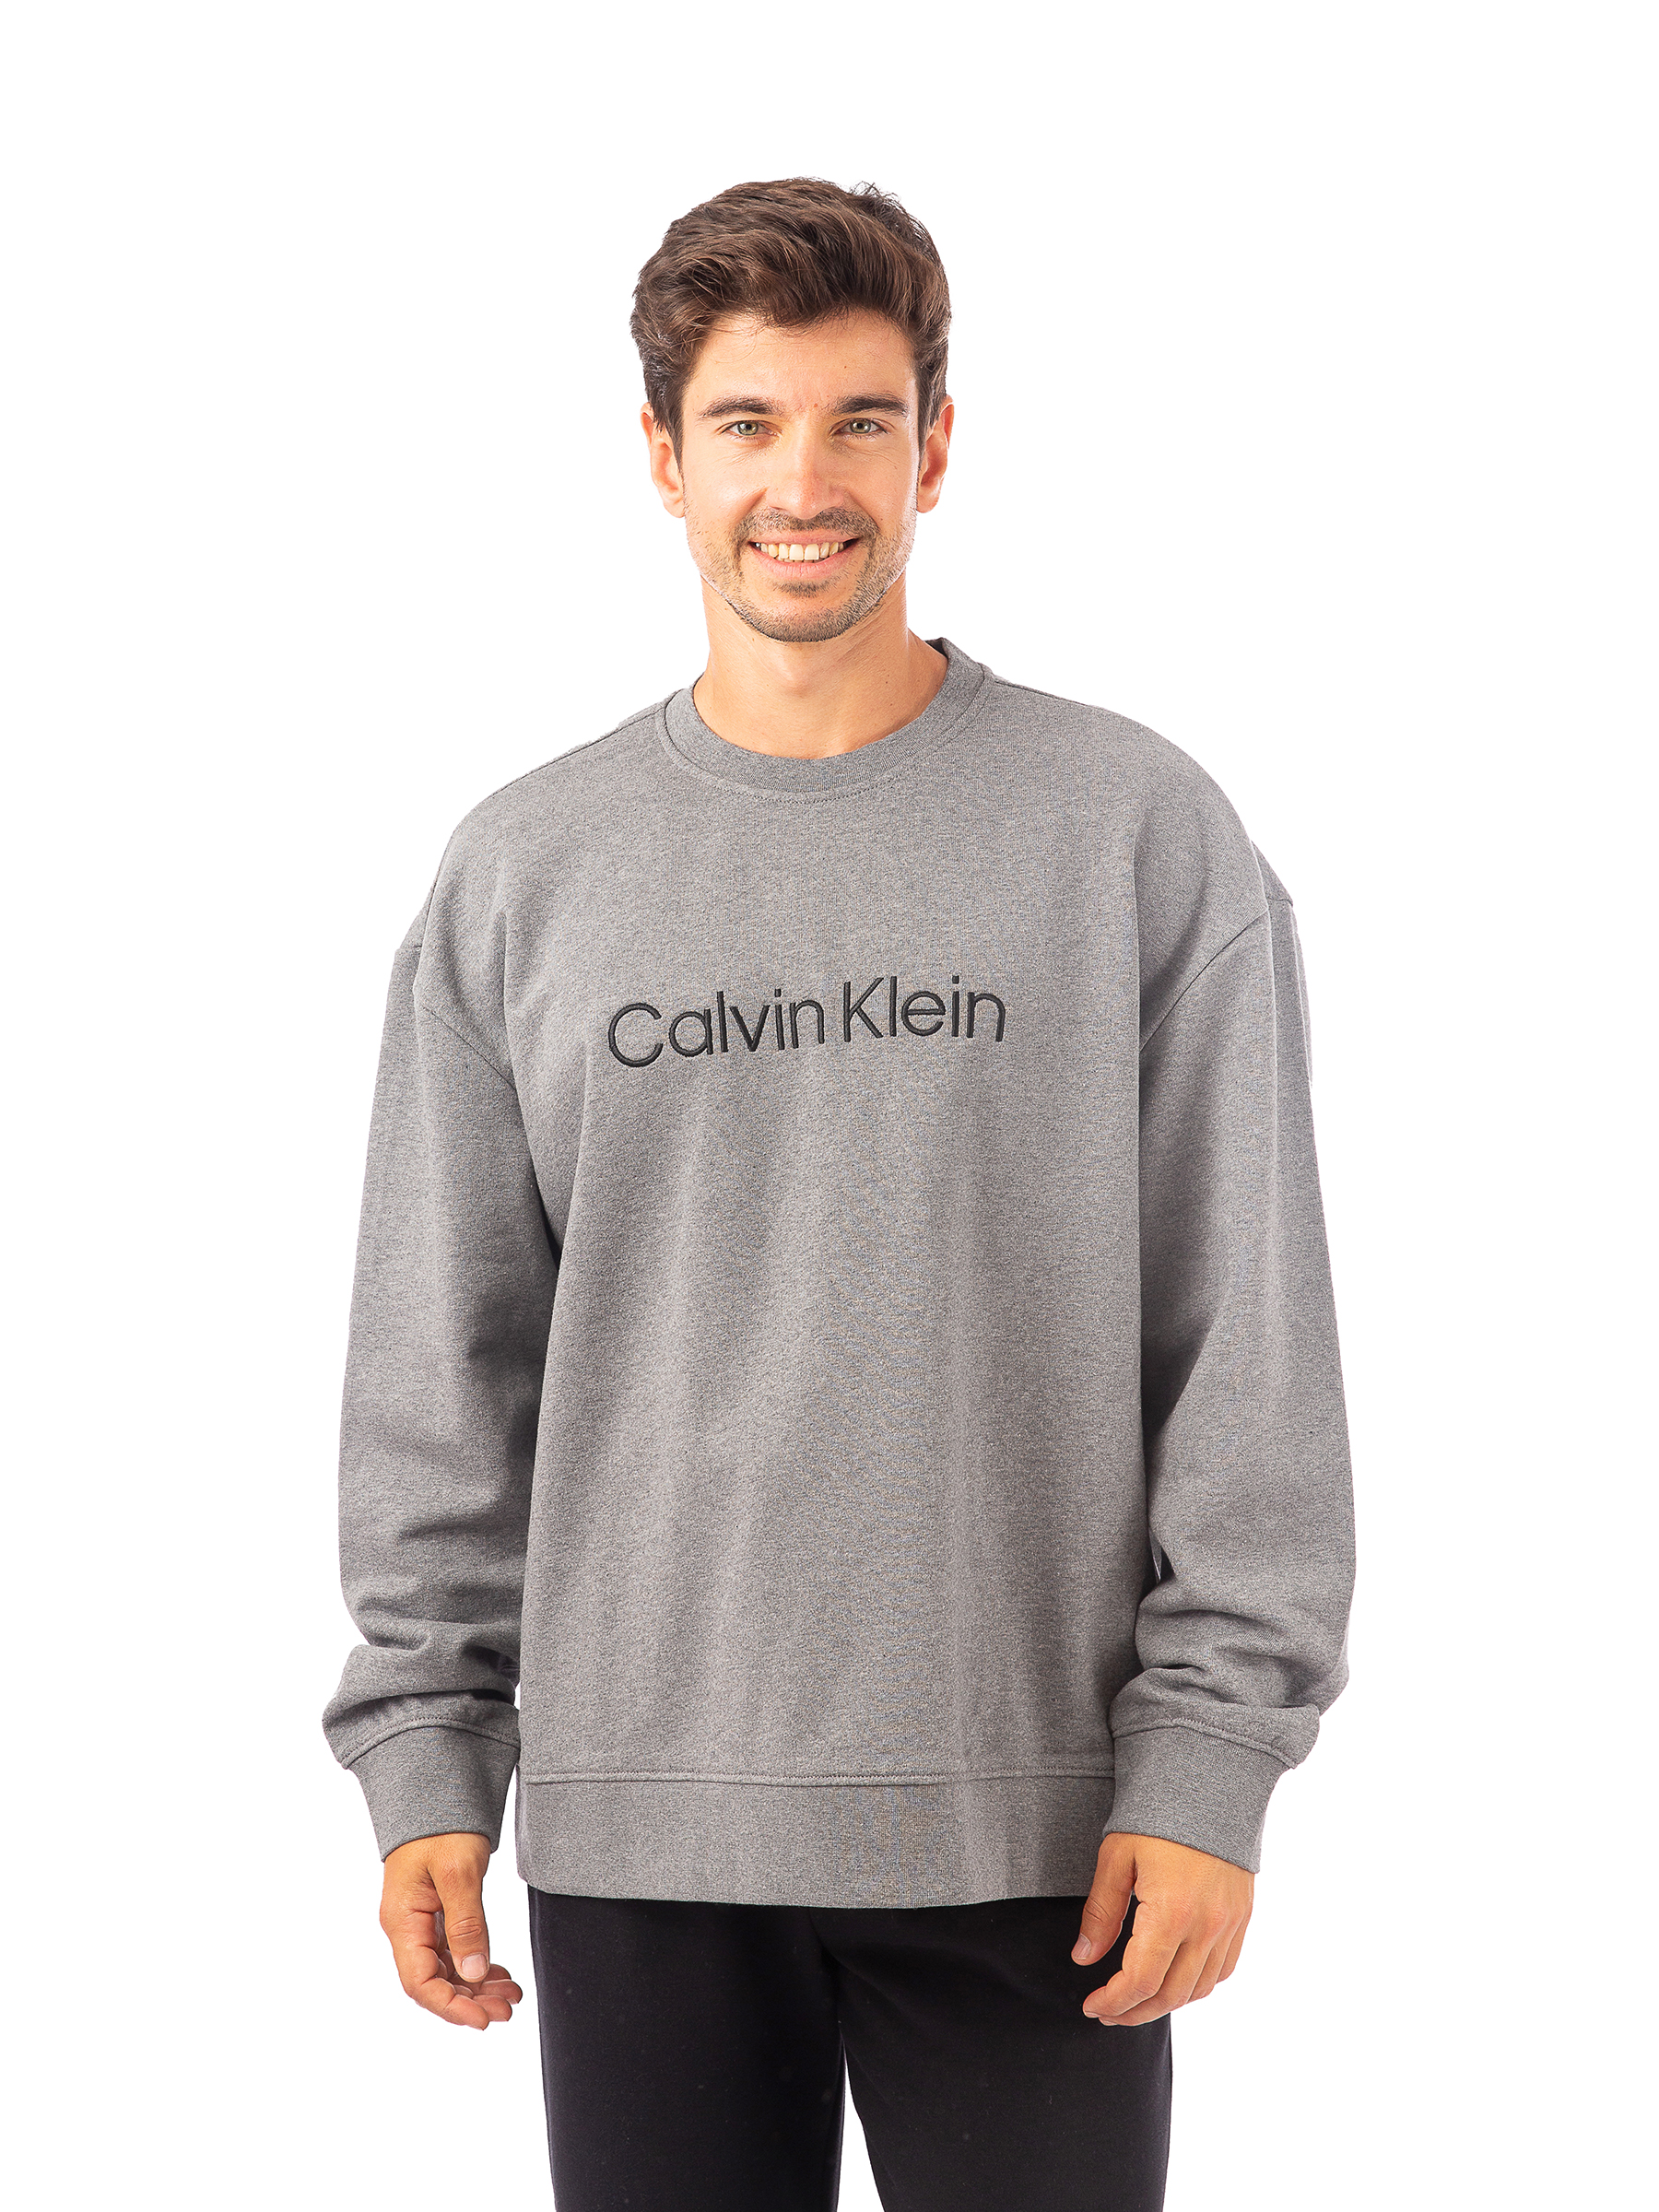 Свитшот мужской Calvin Klein 40HM230 серый 2XL